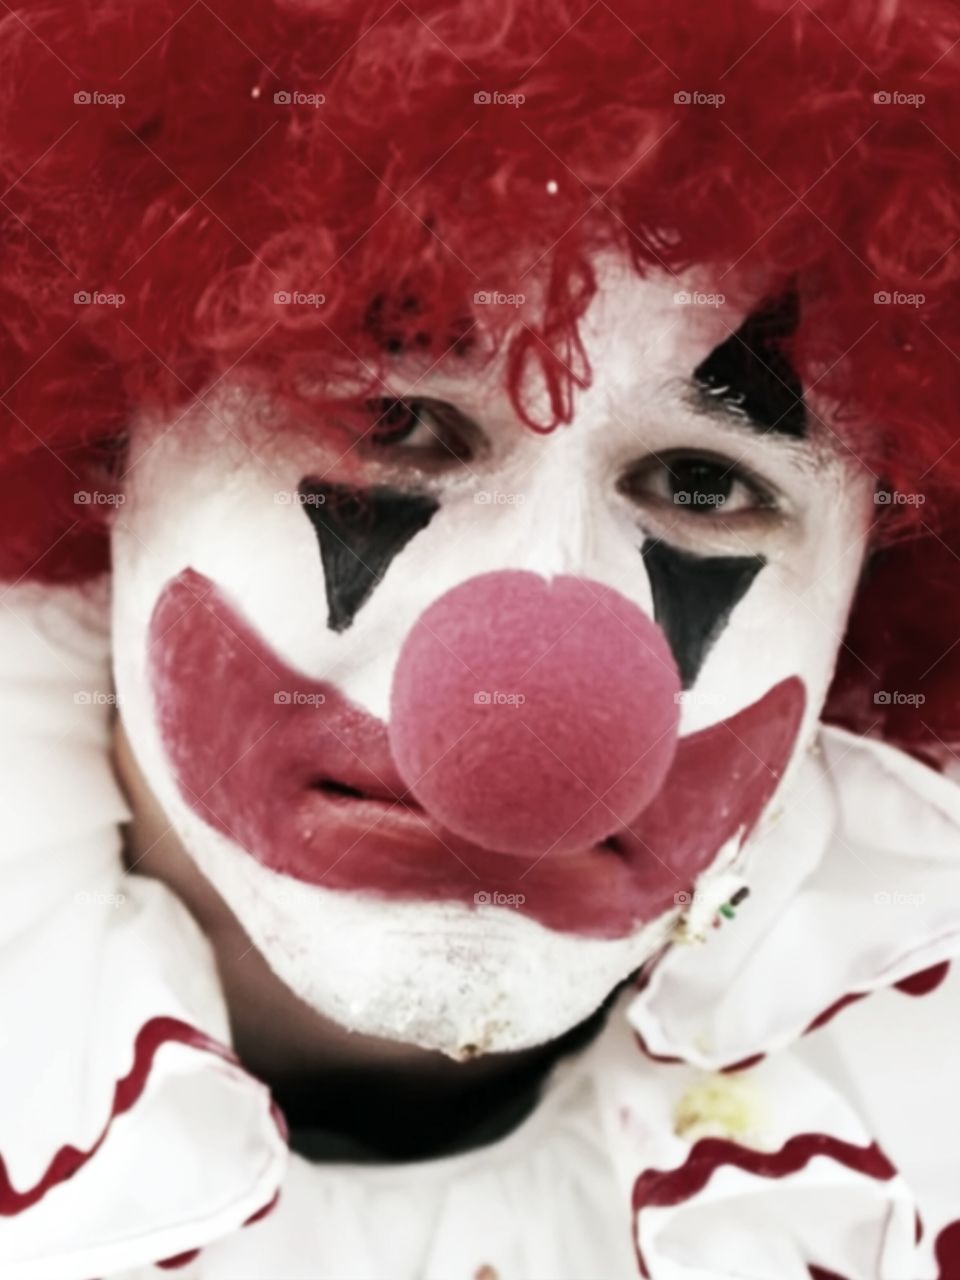 the sad clown